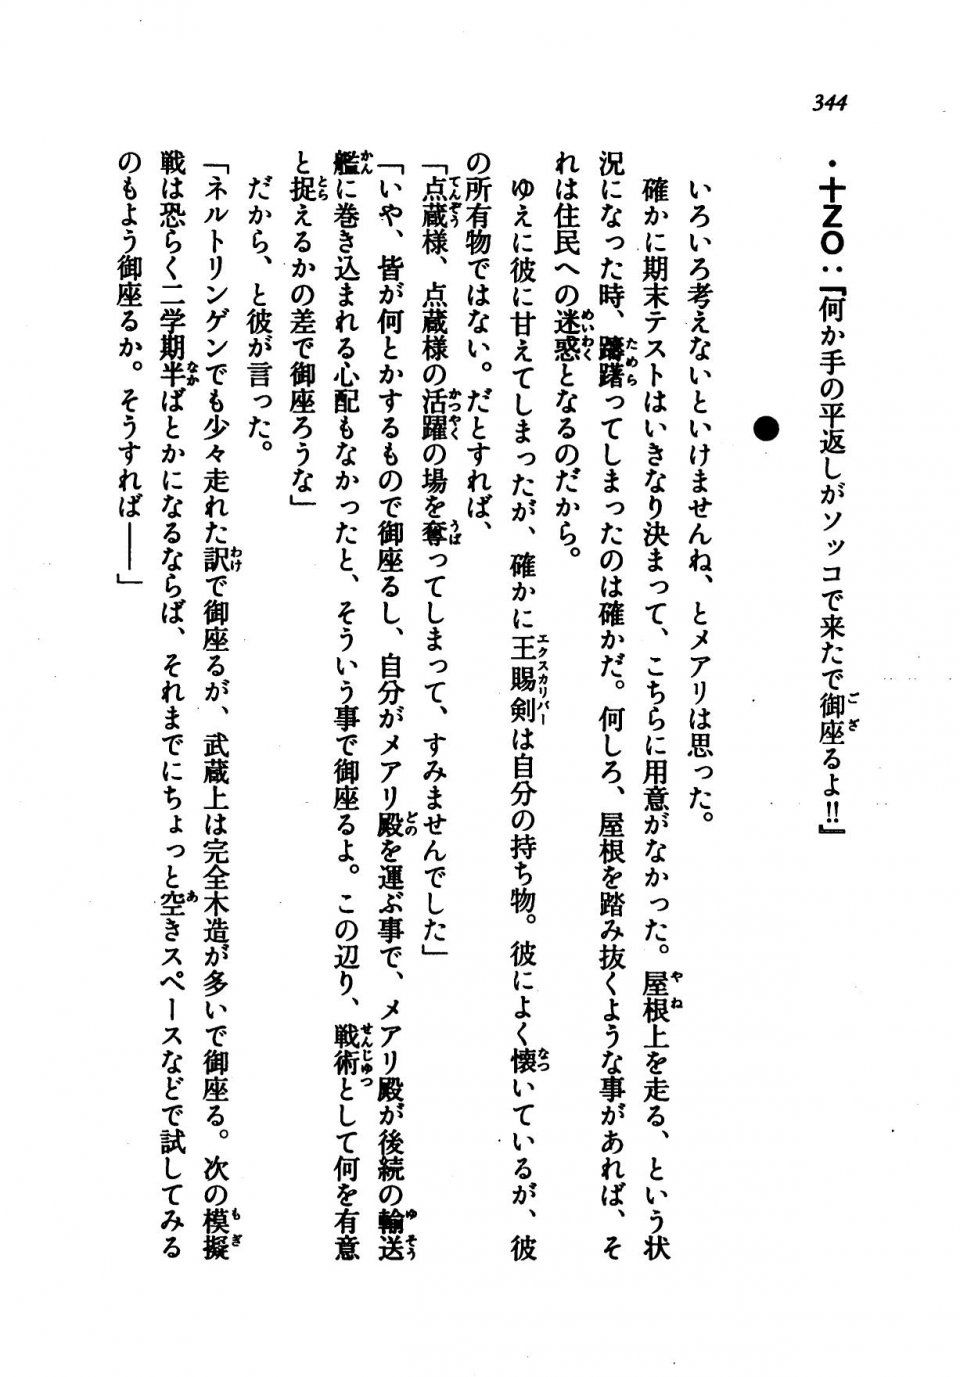 Kyoukai Senjou no Horizon LN Vol 21(8C) Part 1 - Photo #343